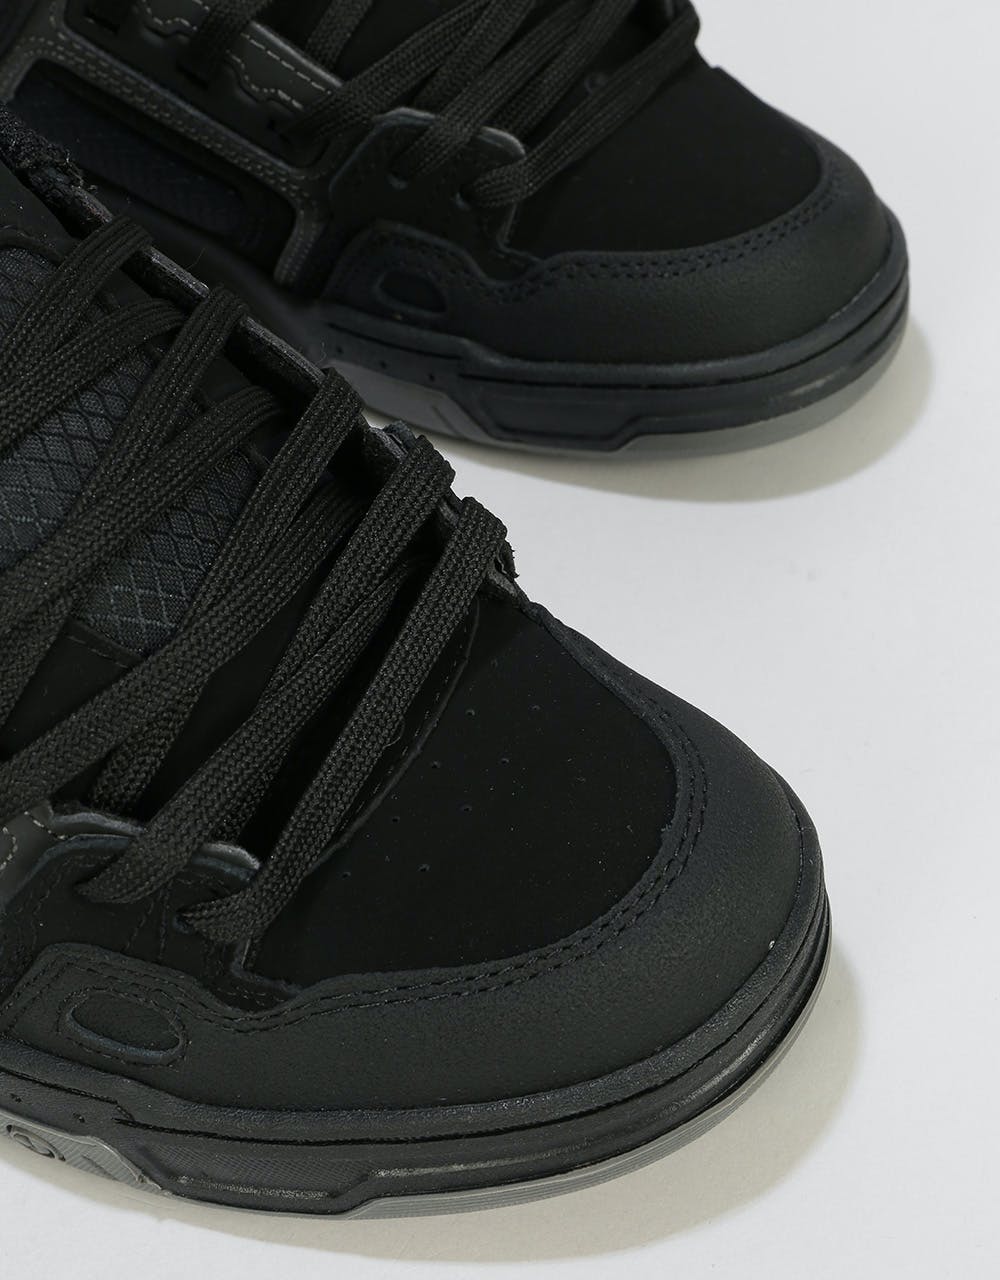 DVS Commanche Skate Shoes - Black Reflective/Charcoal Nubuck